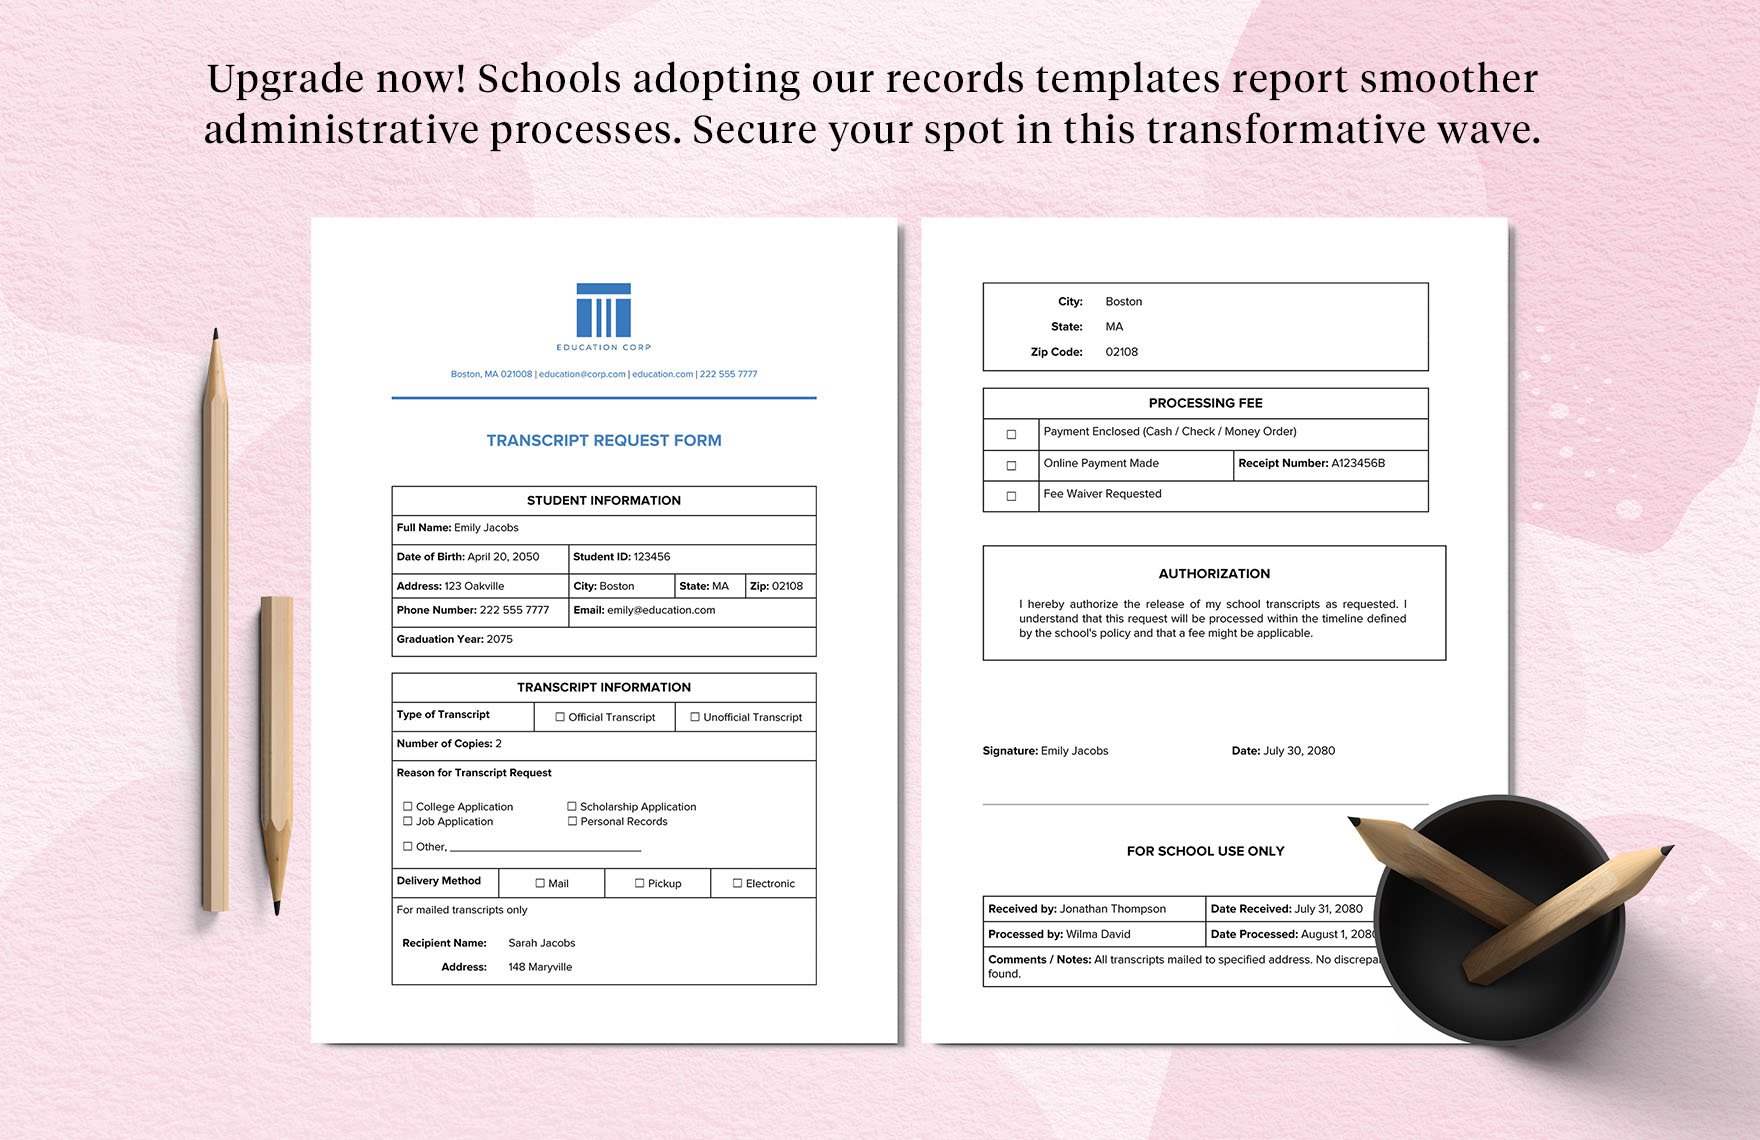 Transcript Request Form Template